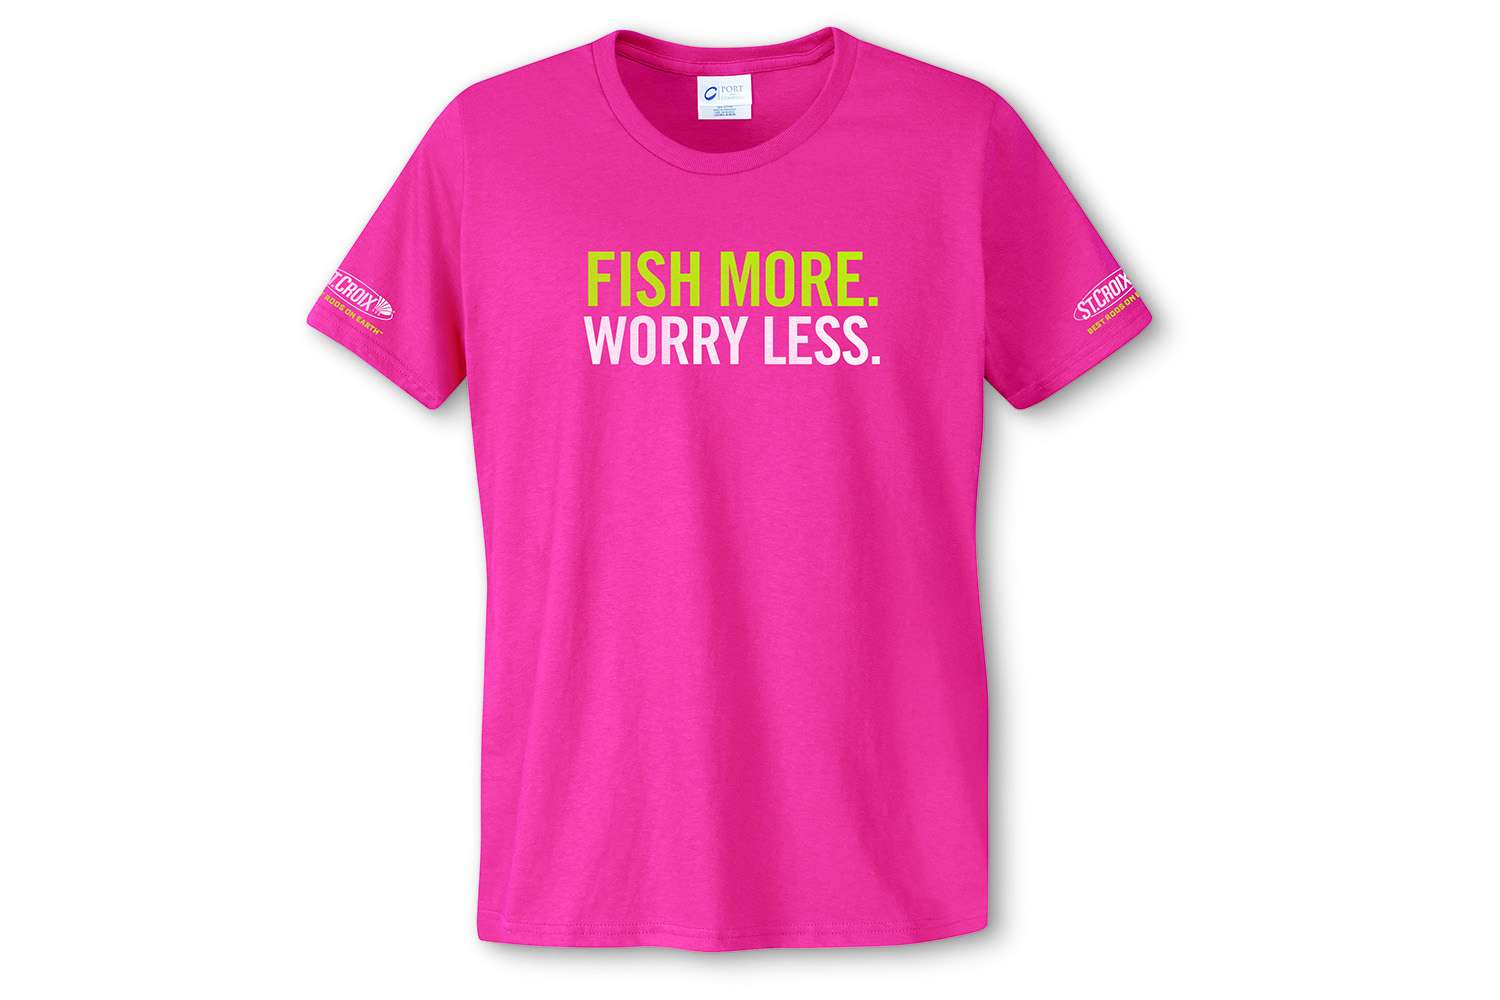 Women's St. Croix Fish More Worry Less T-shirt, $25